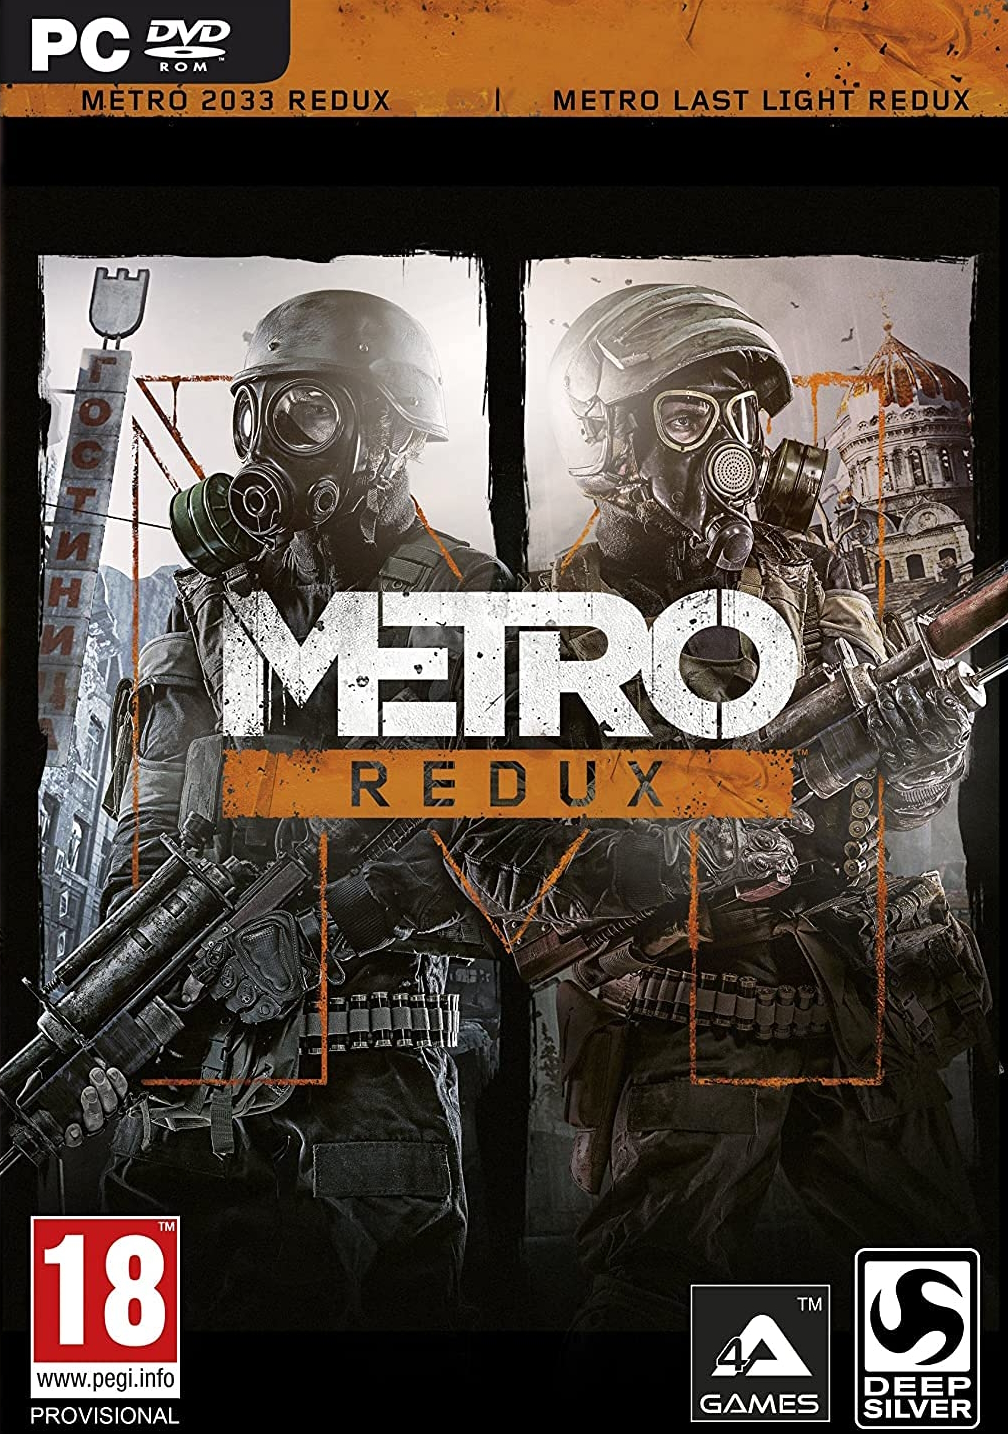 Игра Metro Redux (PC, полностью на русском языке)